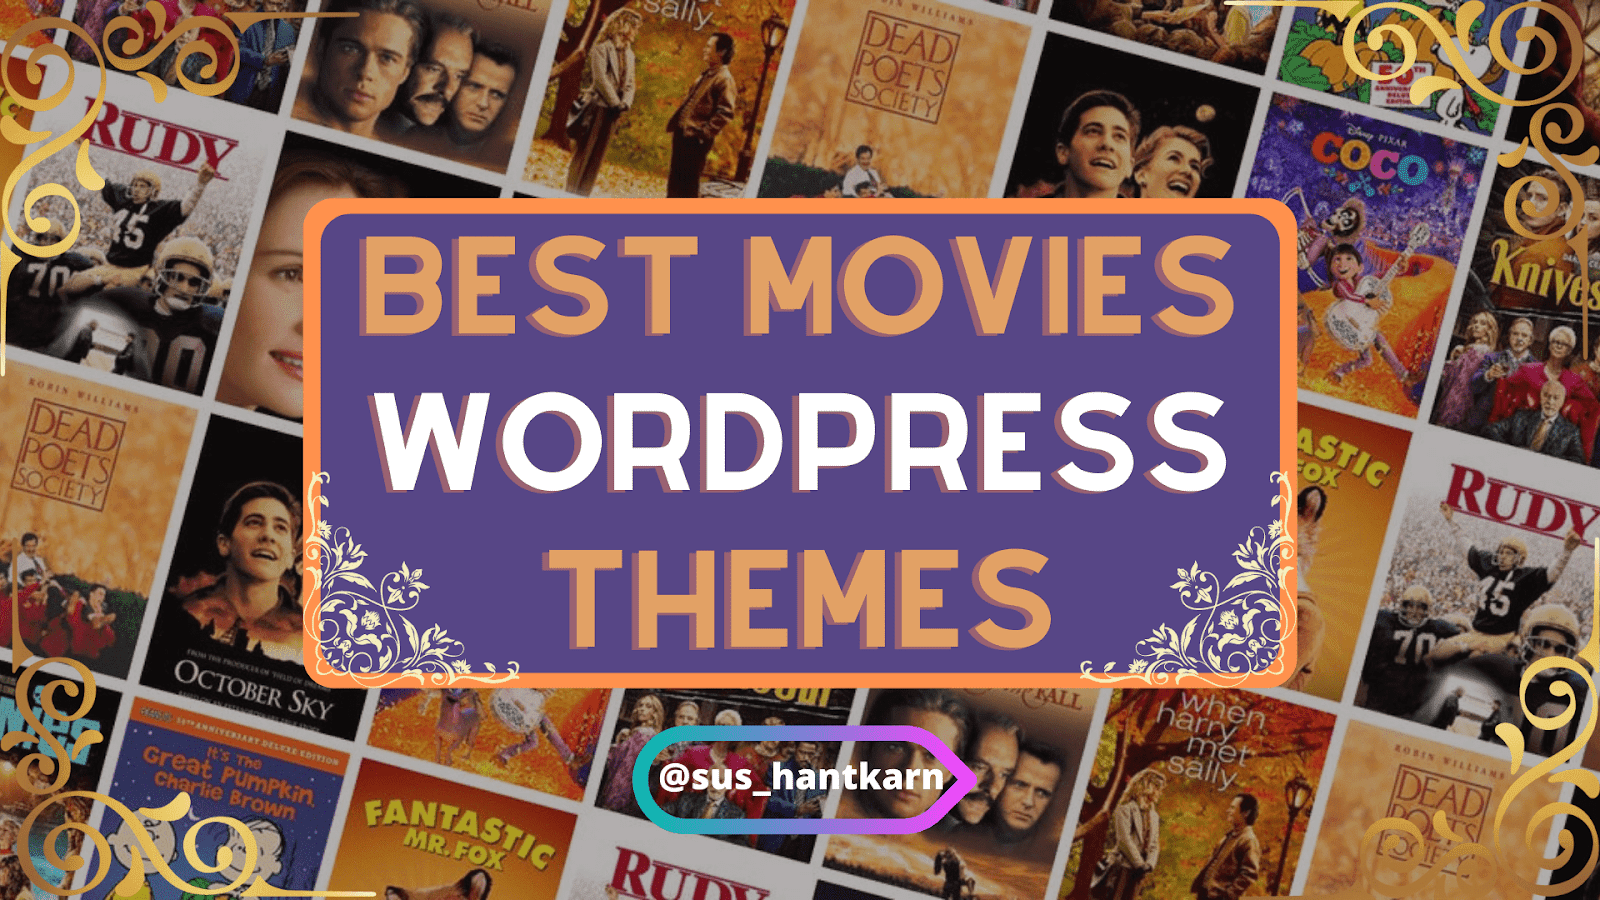 Movies WordPress Themes